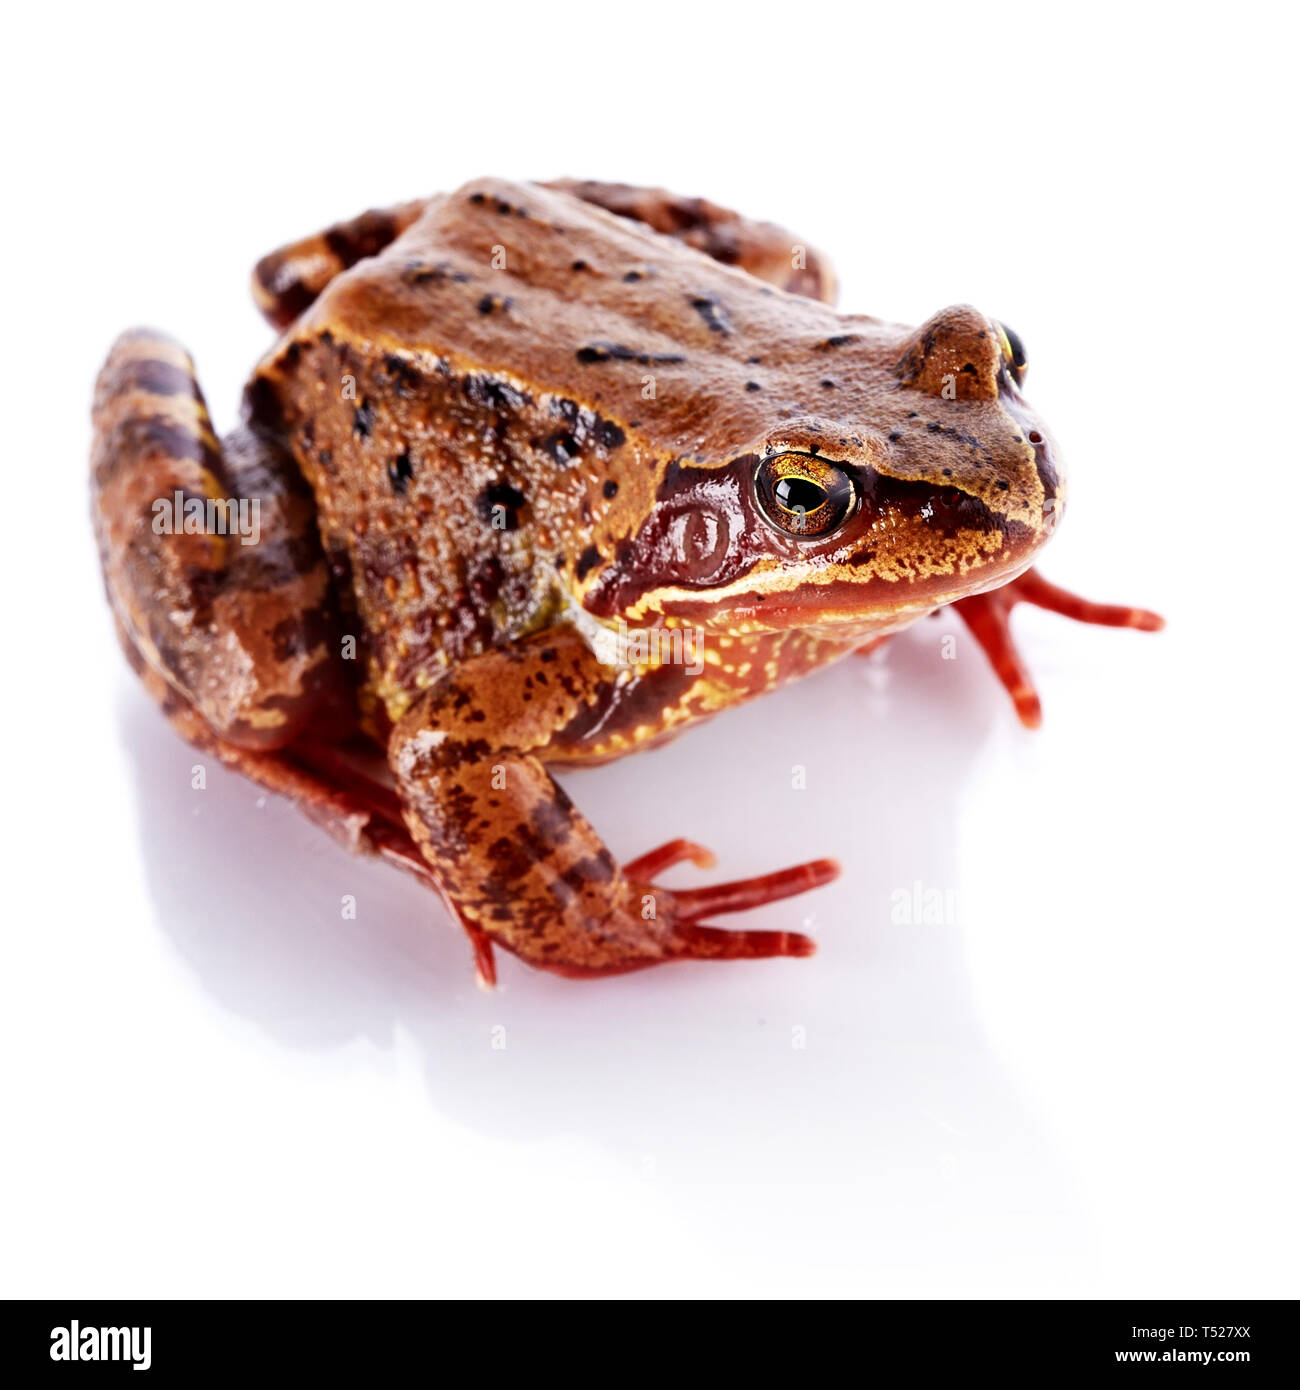 Common frog. Wet frog. Amphibian. Brown frog. Stock Photo